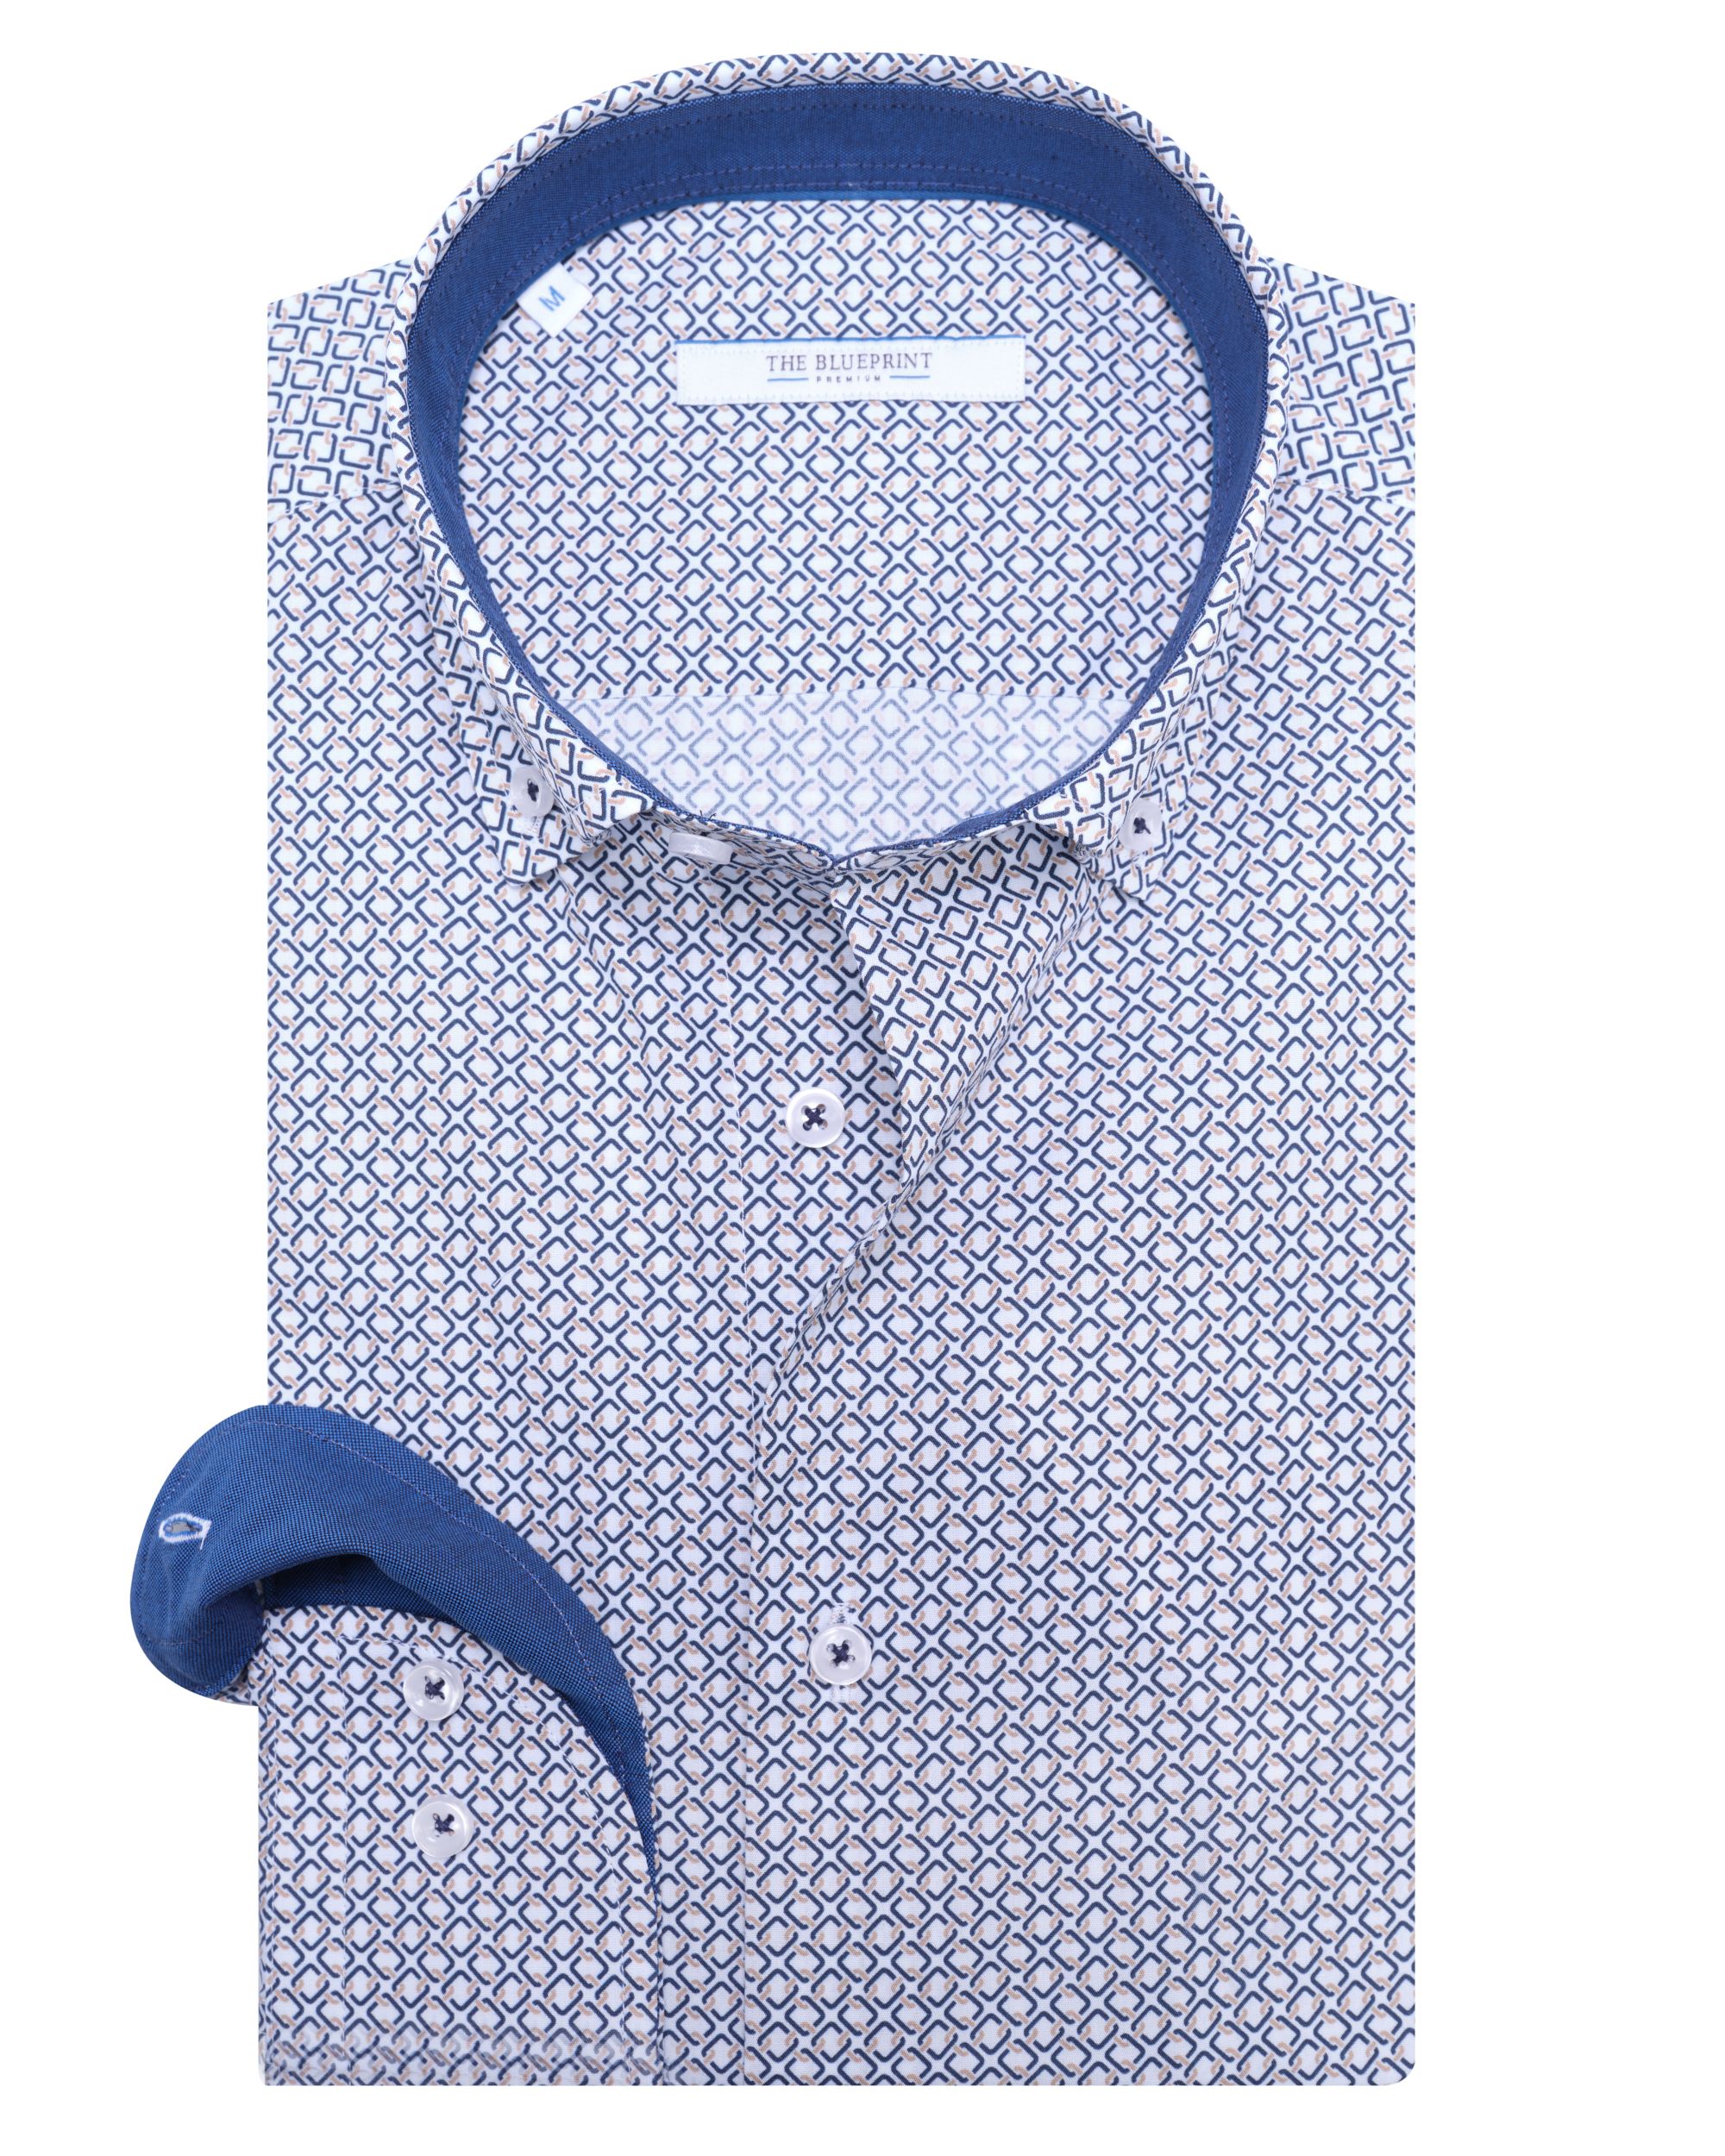 The BLUEPRINT Premium Casual Overhemd LM Blauw dessin 082241-001-L